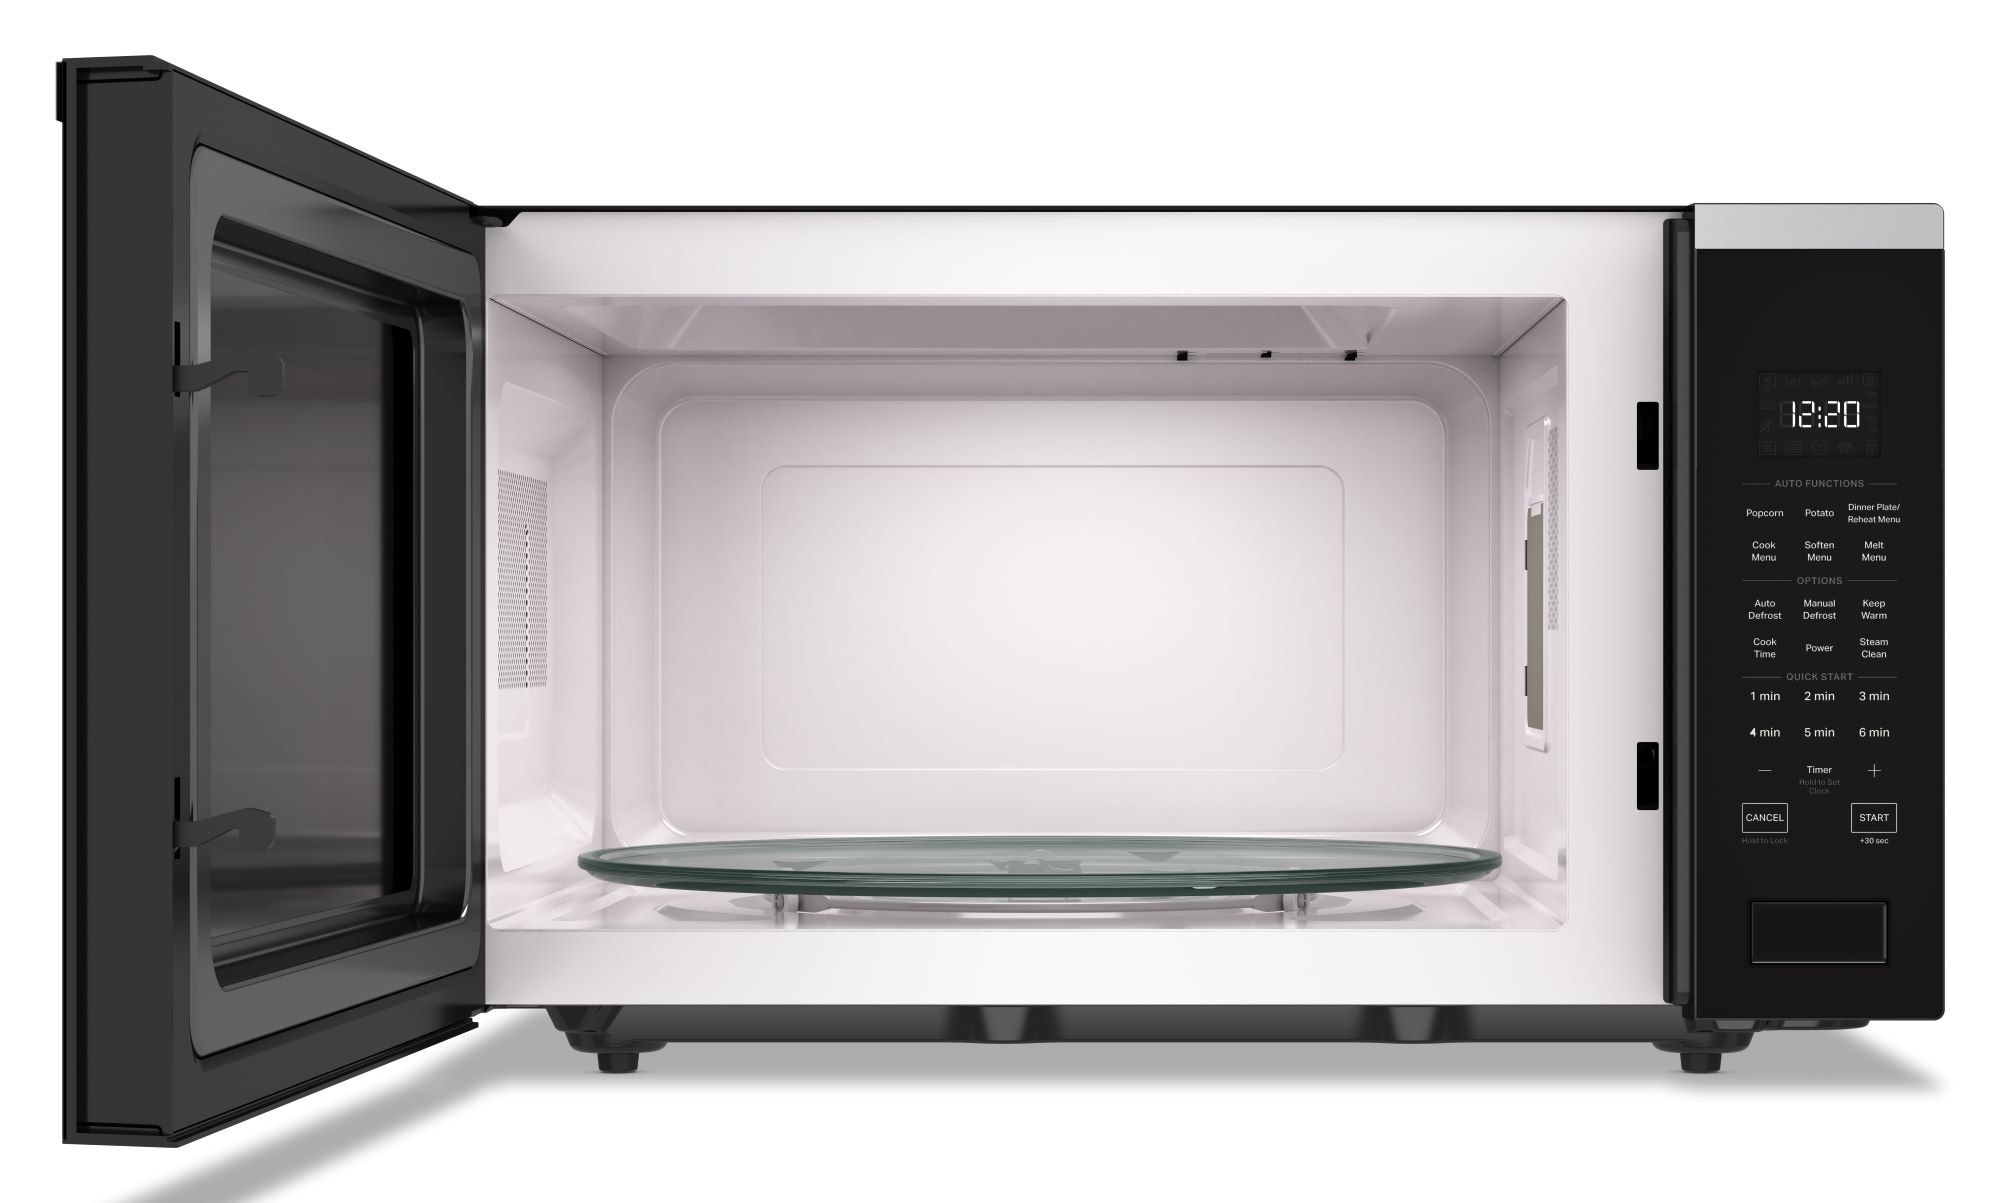 Whirlpool Countertop Semi-Truck Microwave Oven